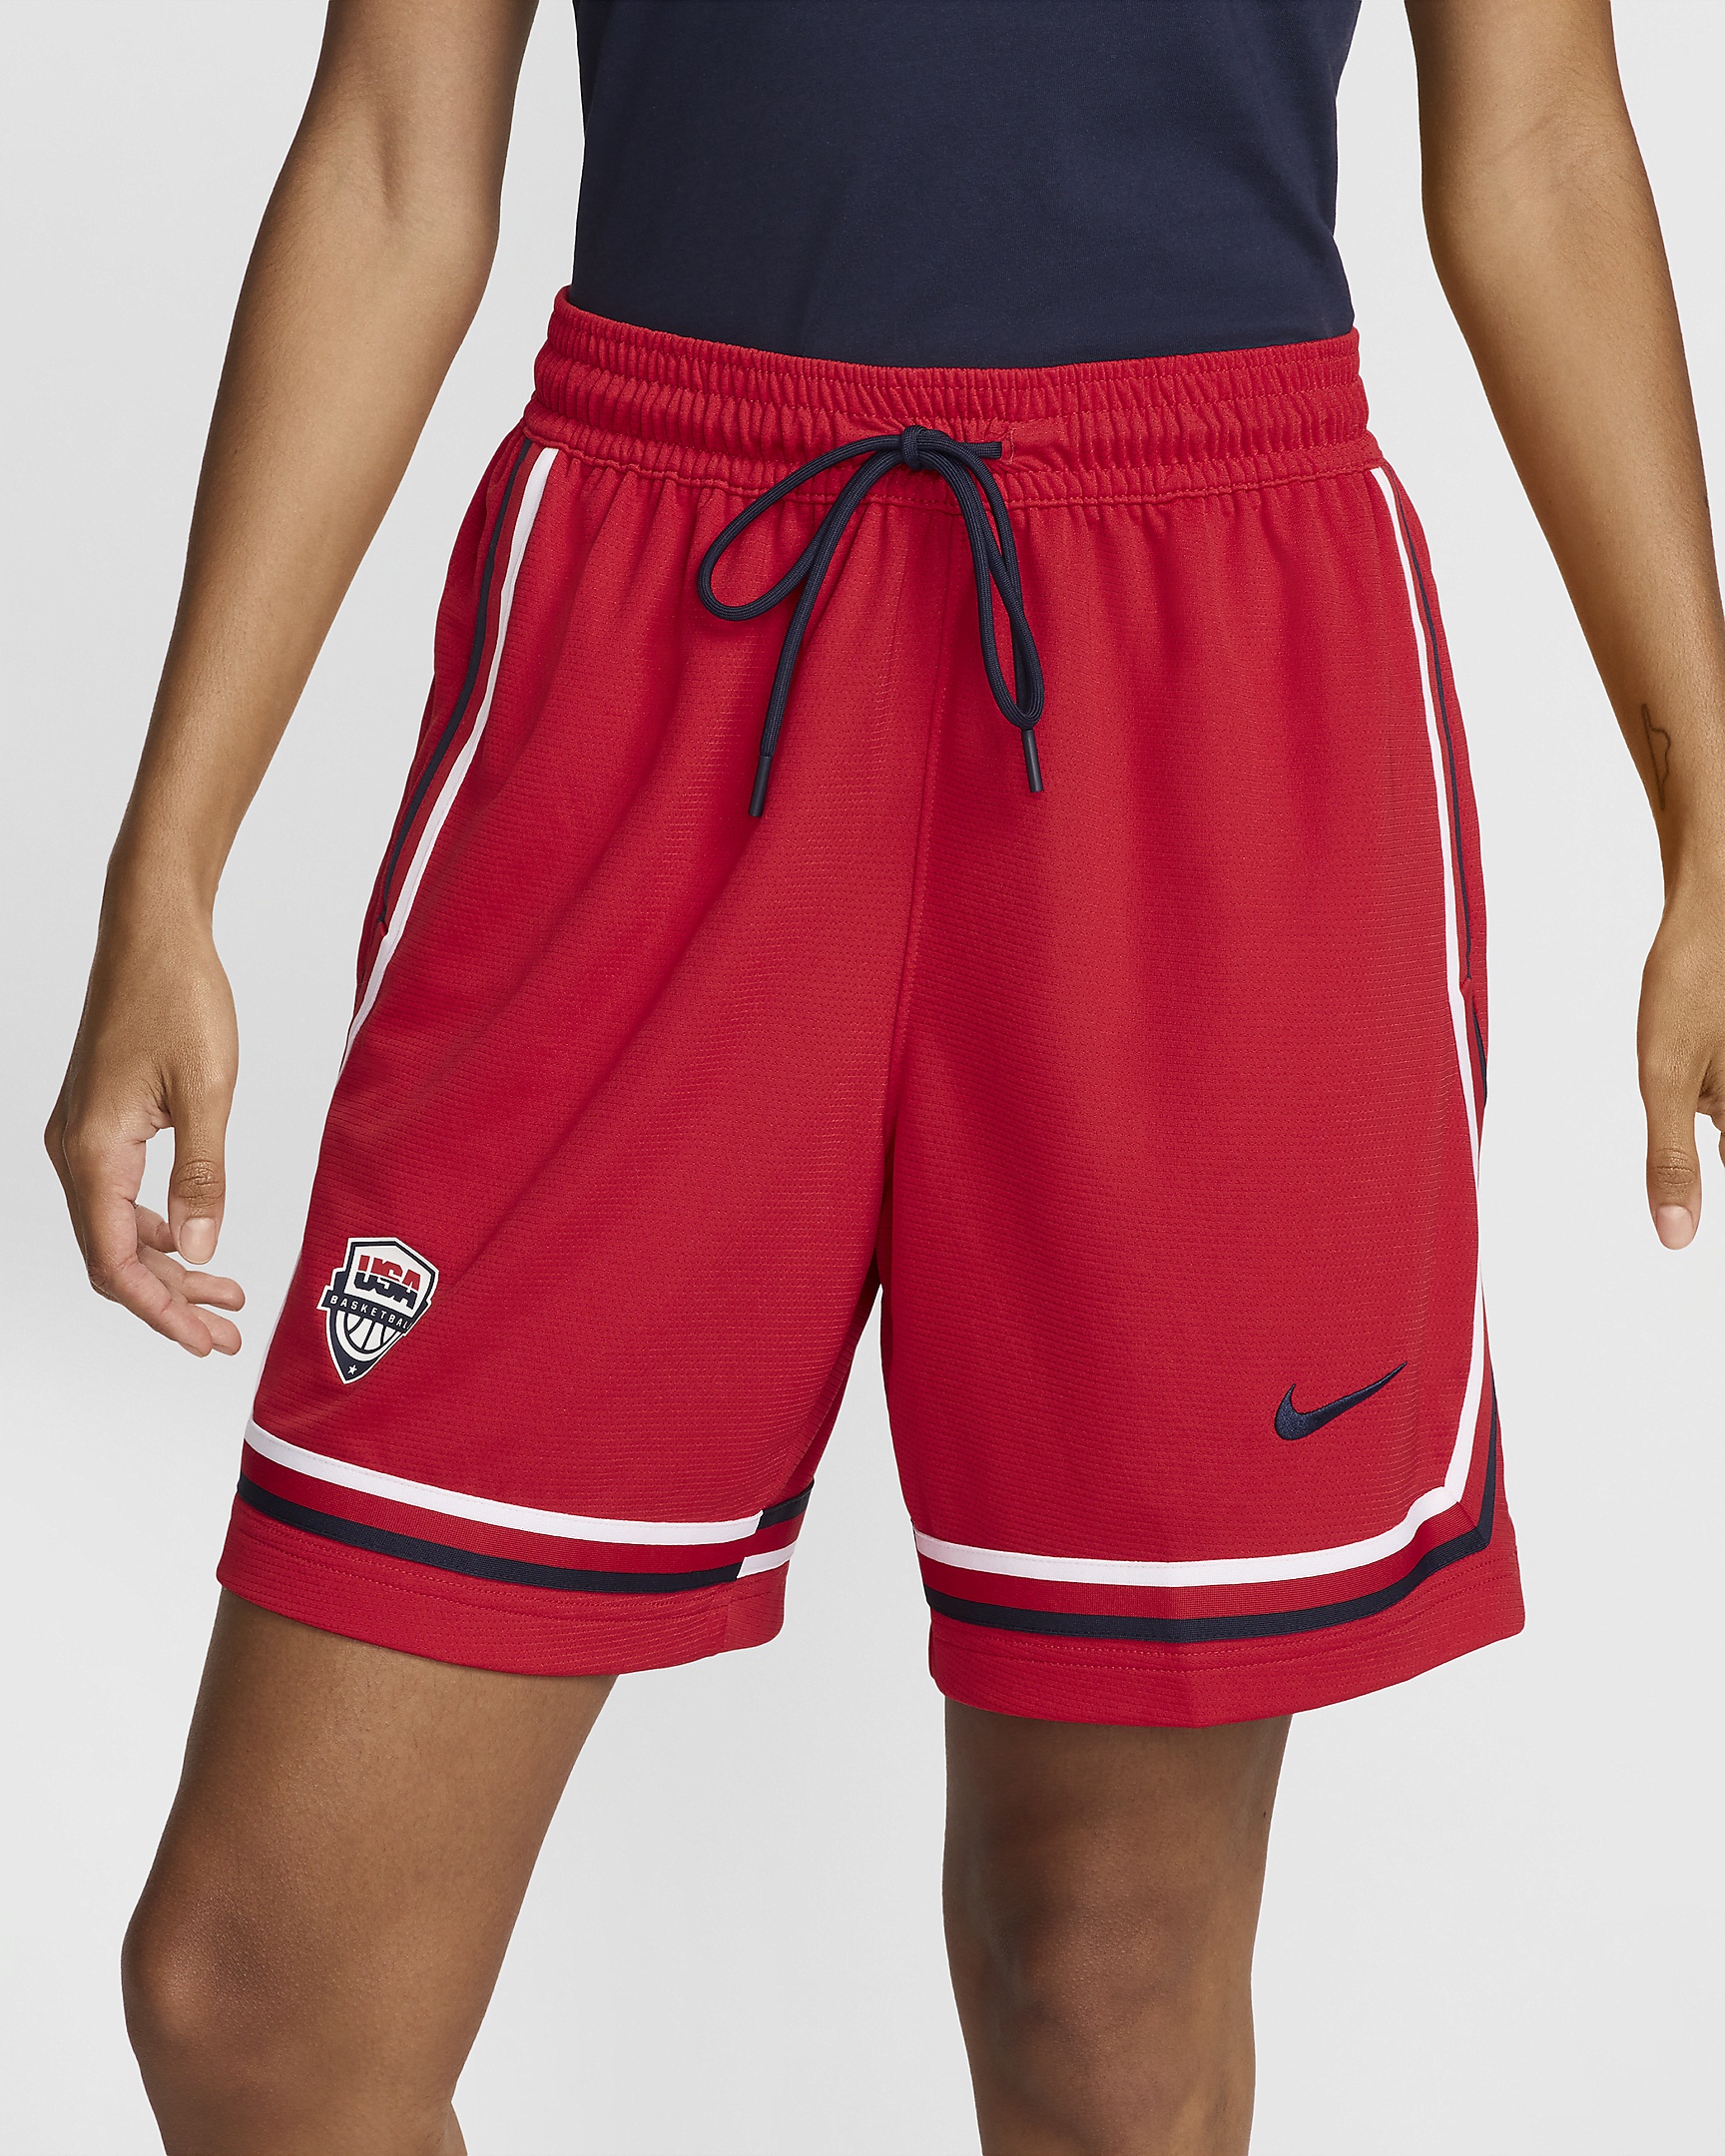 USAB Practice Women's Nike Basketball Shorts - 2